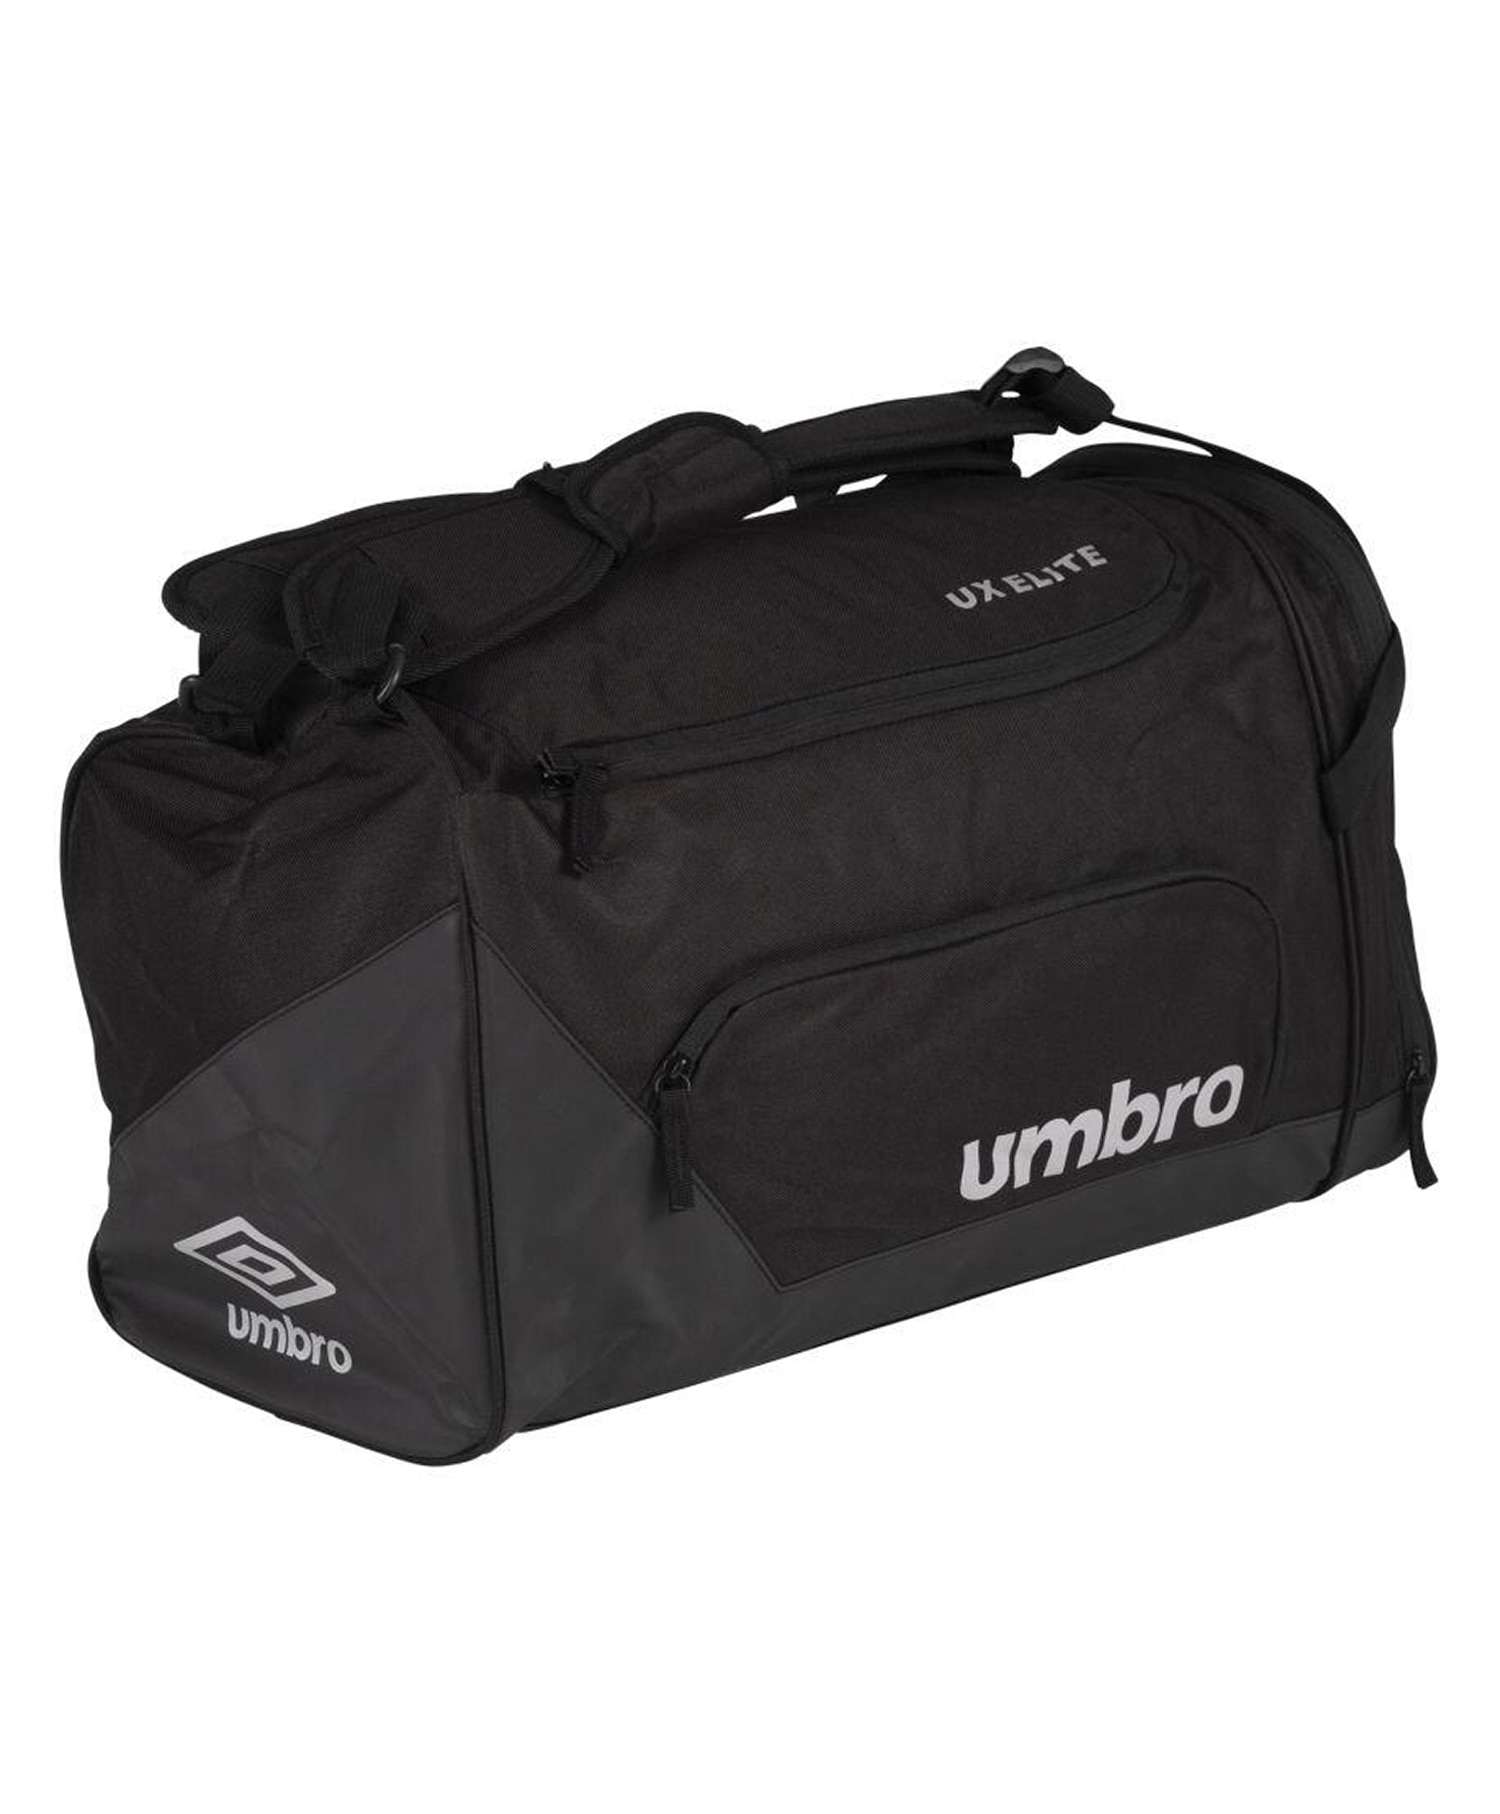 Umbro UX Elite 40L Treningsbag 40L